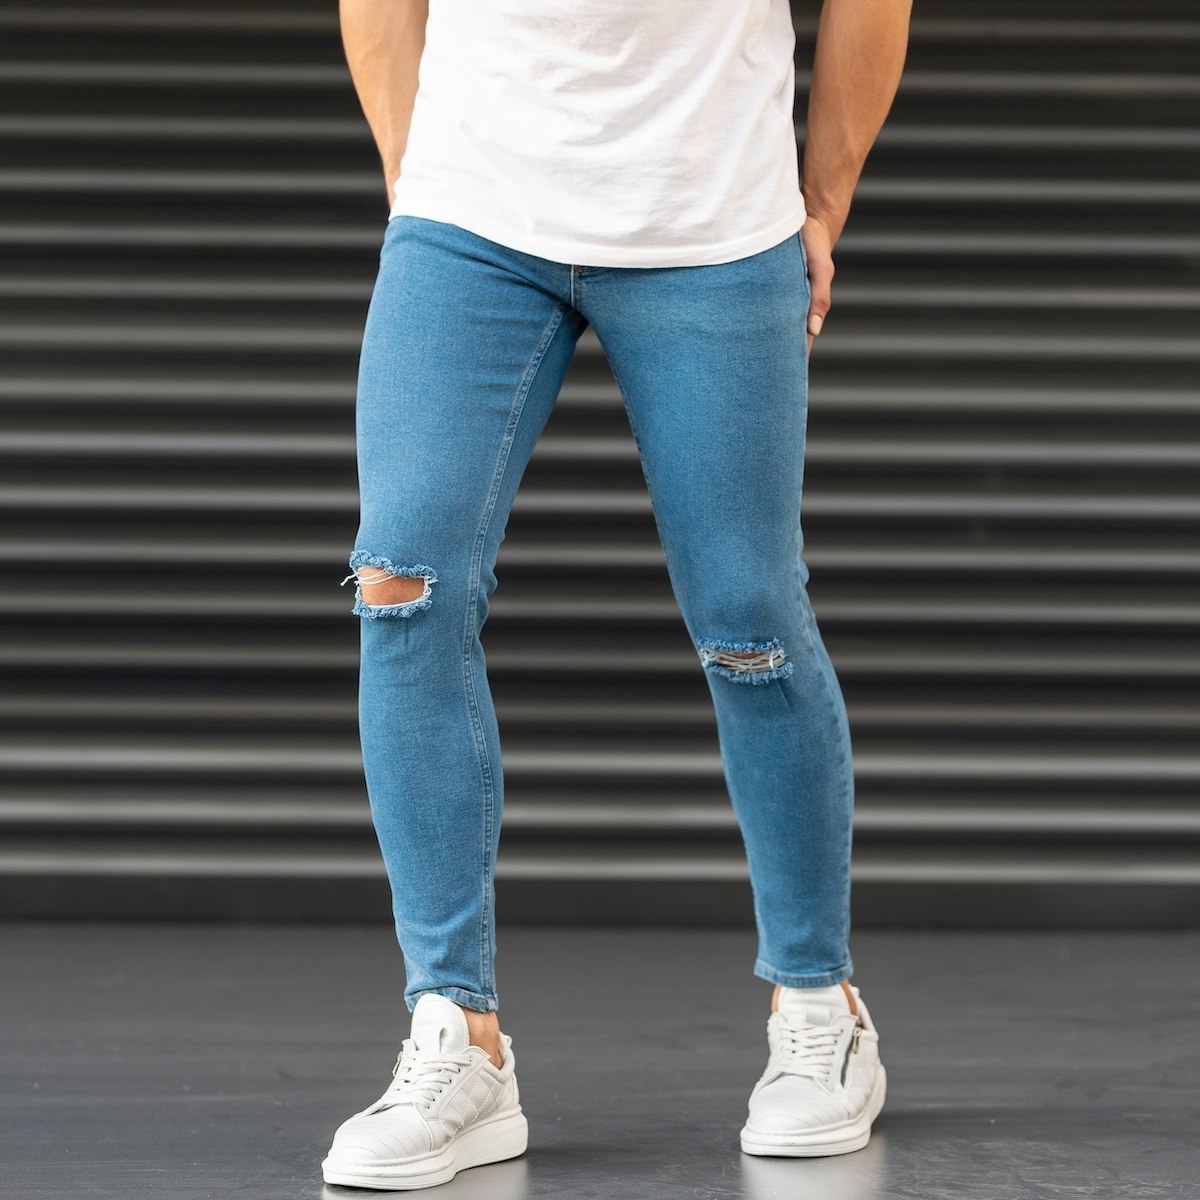 blue torn jeans